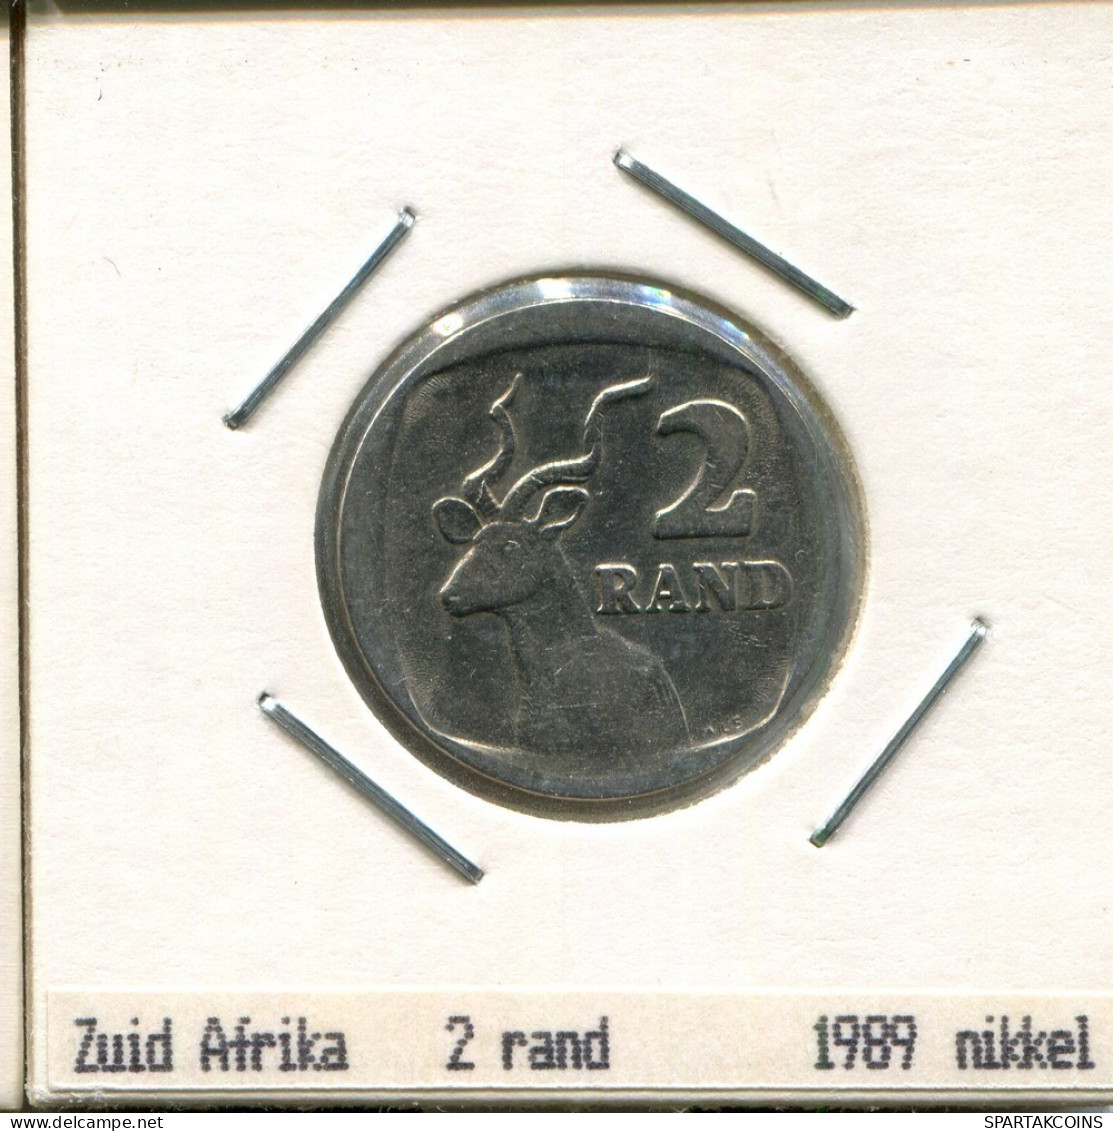 2 RAND 1989 SOUTH AFRICA Coin #AS289.U.A - Zuid-Afrika